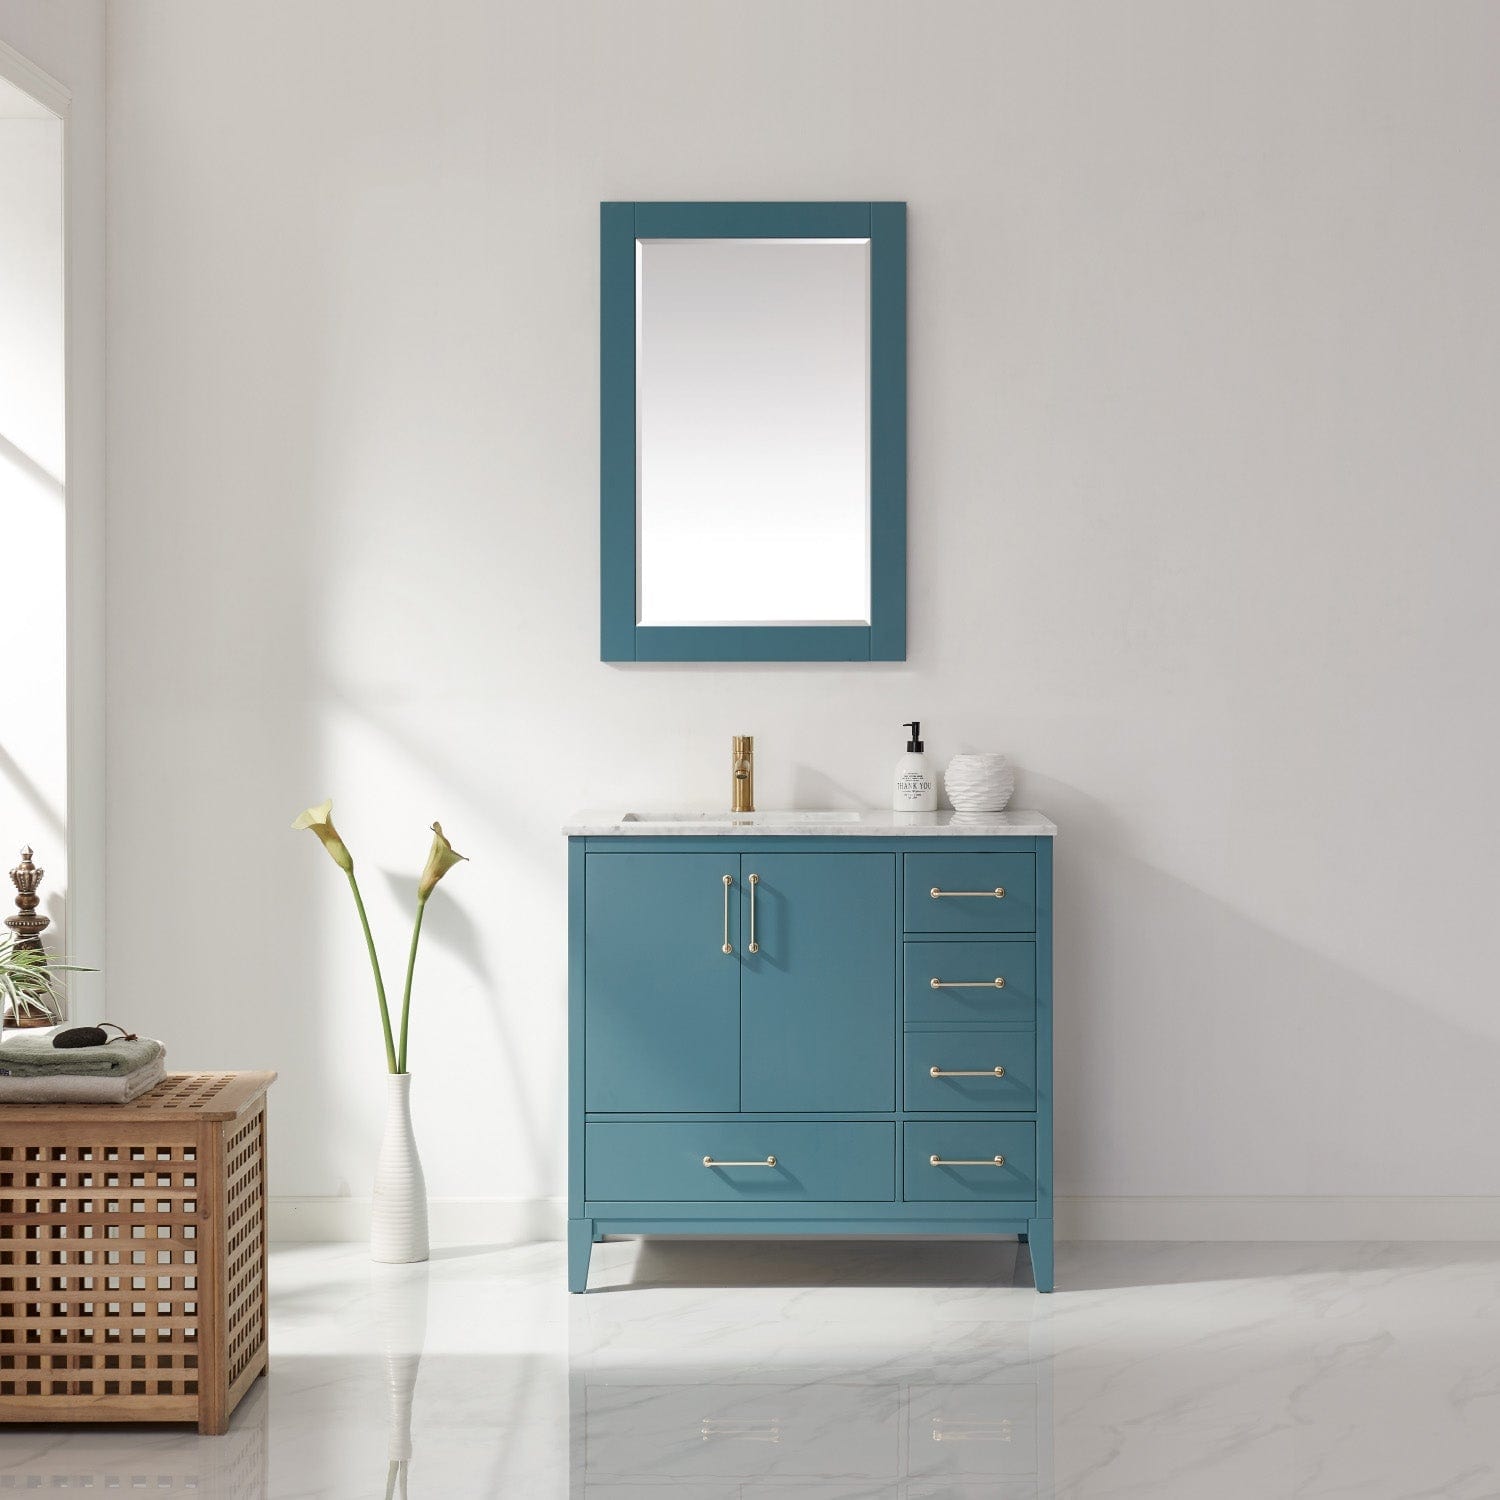 Altair Sutton 36" Single Bathroom Vanity Set in Royal Green and Carrara White Marble Countertop with Mirror 541036-RG-CA - Molaix631112971836Vanity541036-RG-CA